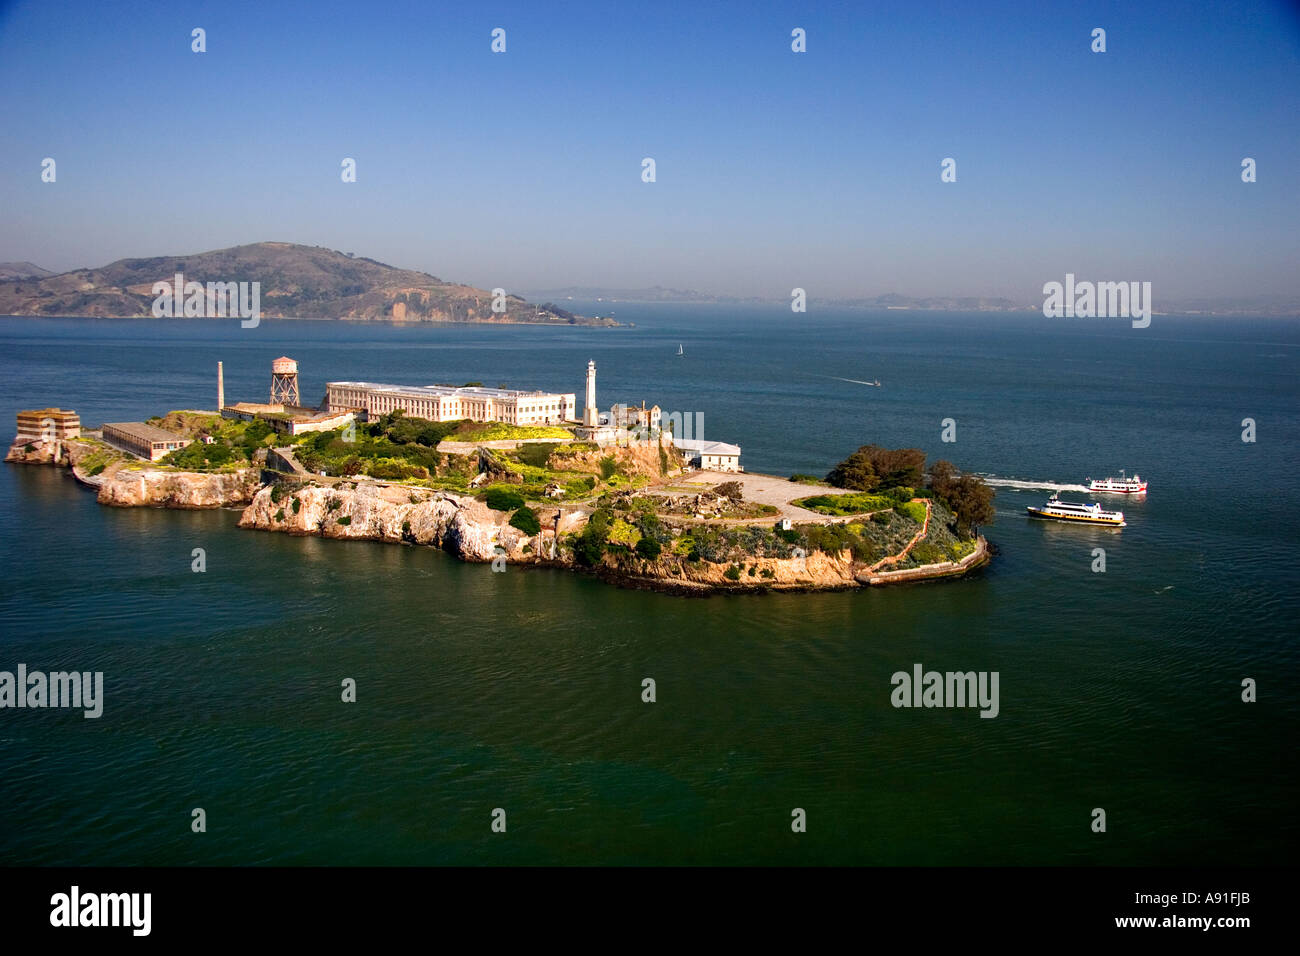 Aerial view of Alcatraz Island in the San Francisco bay, California. Stock Photo